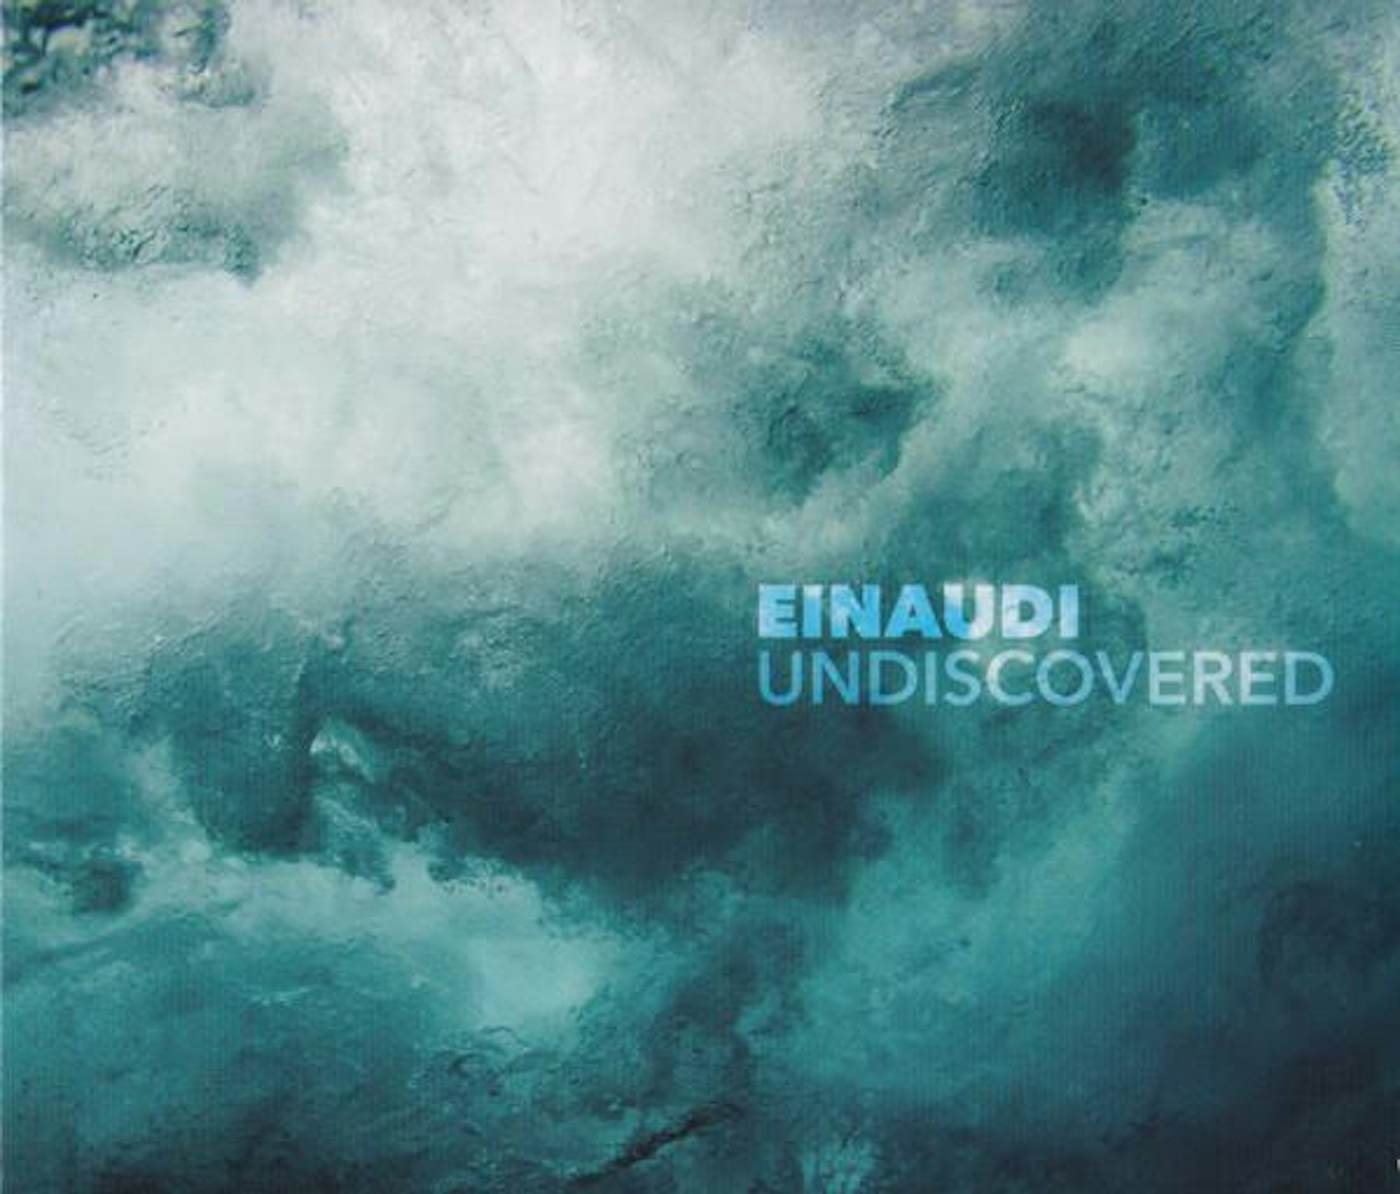 Ludovico Einaudi: Underwater Deluxe Box Set – Classical